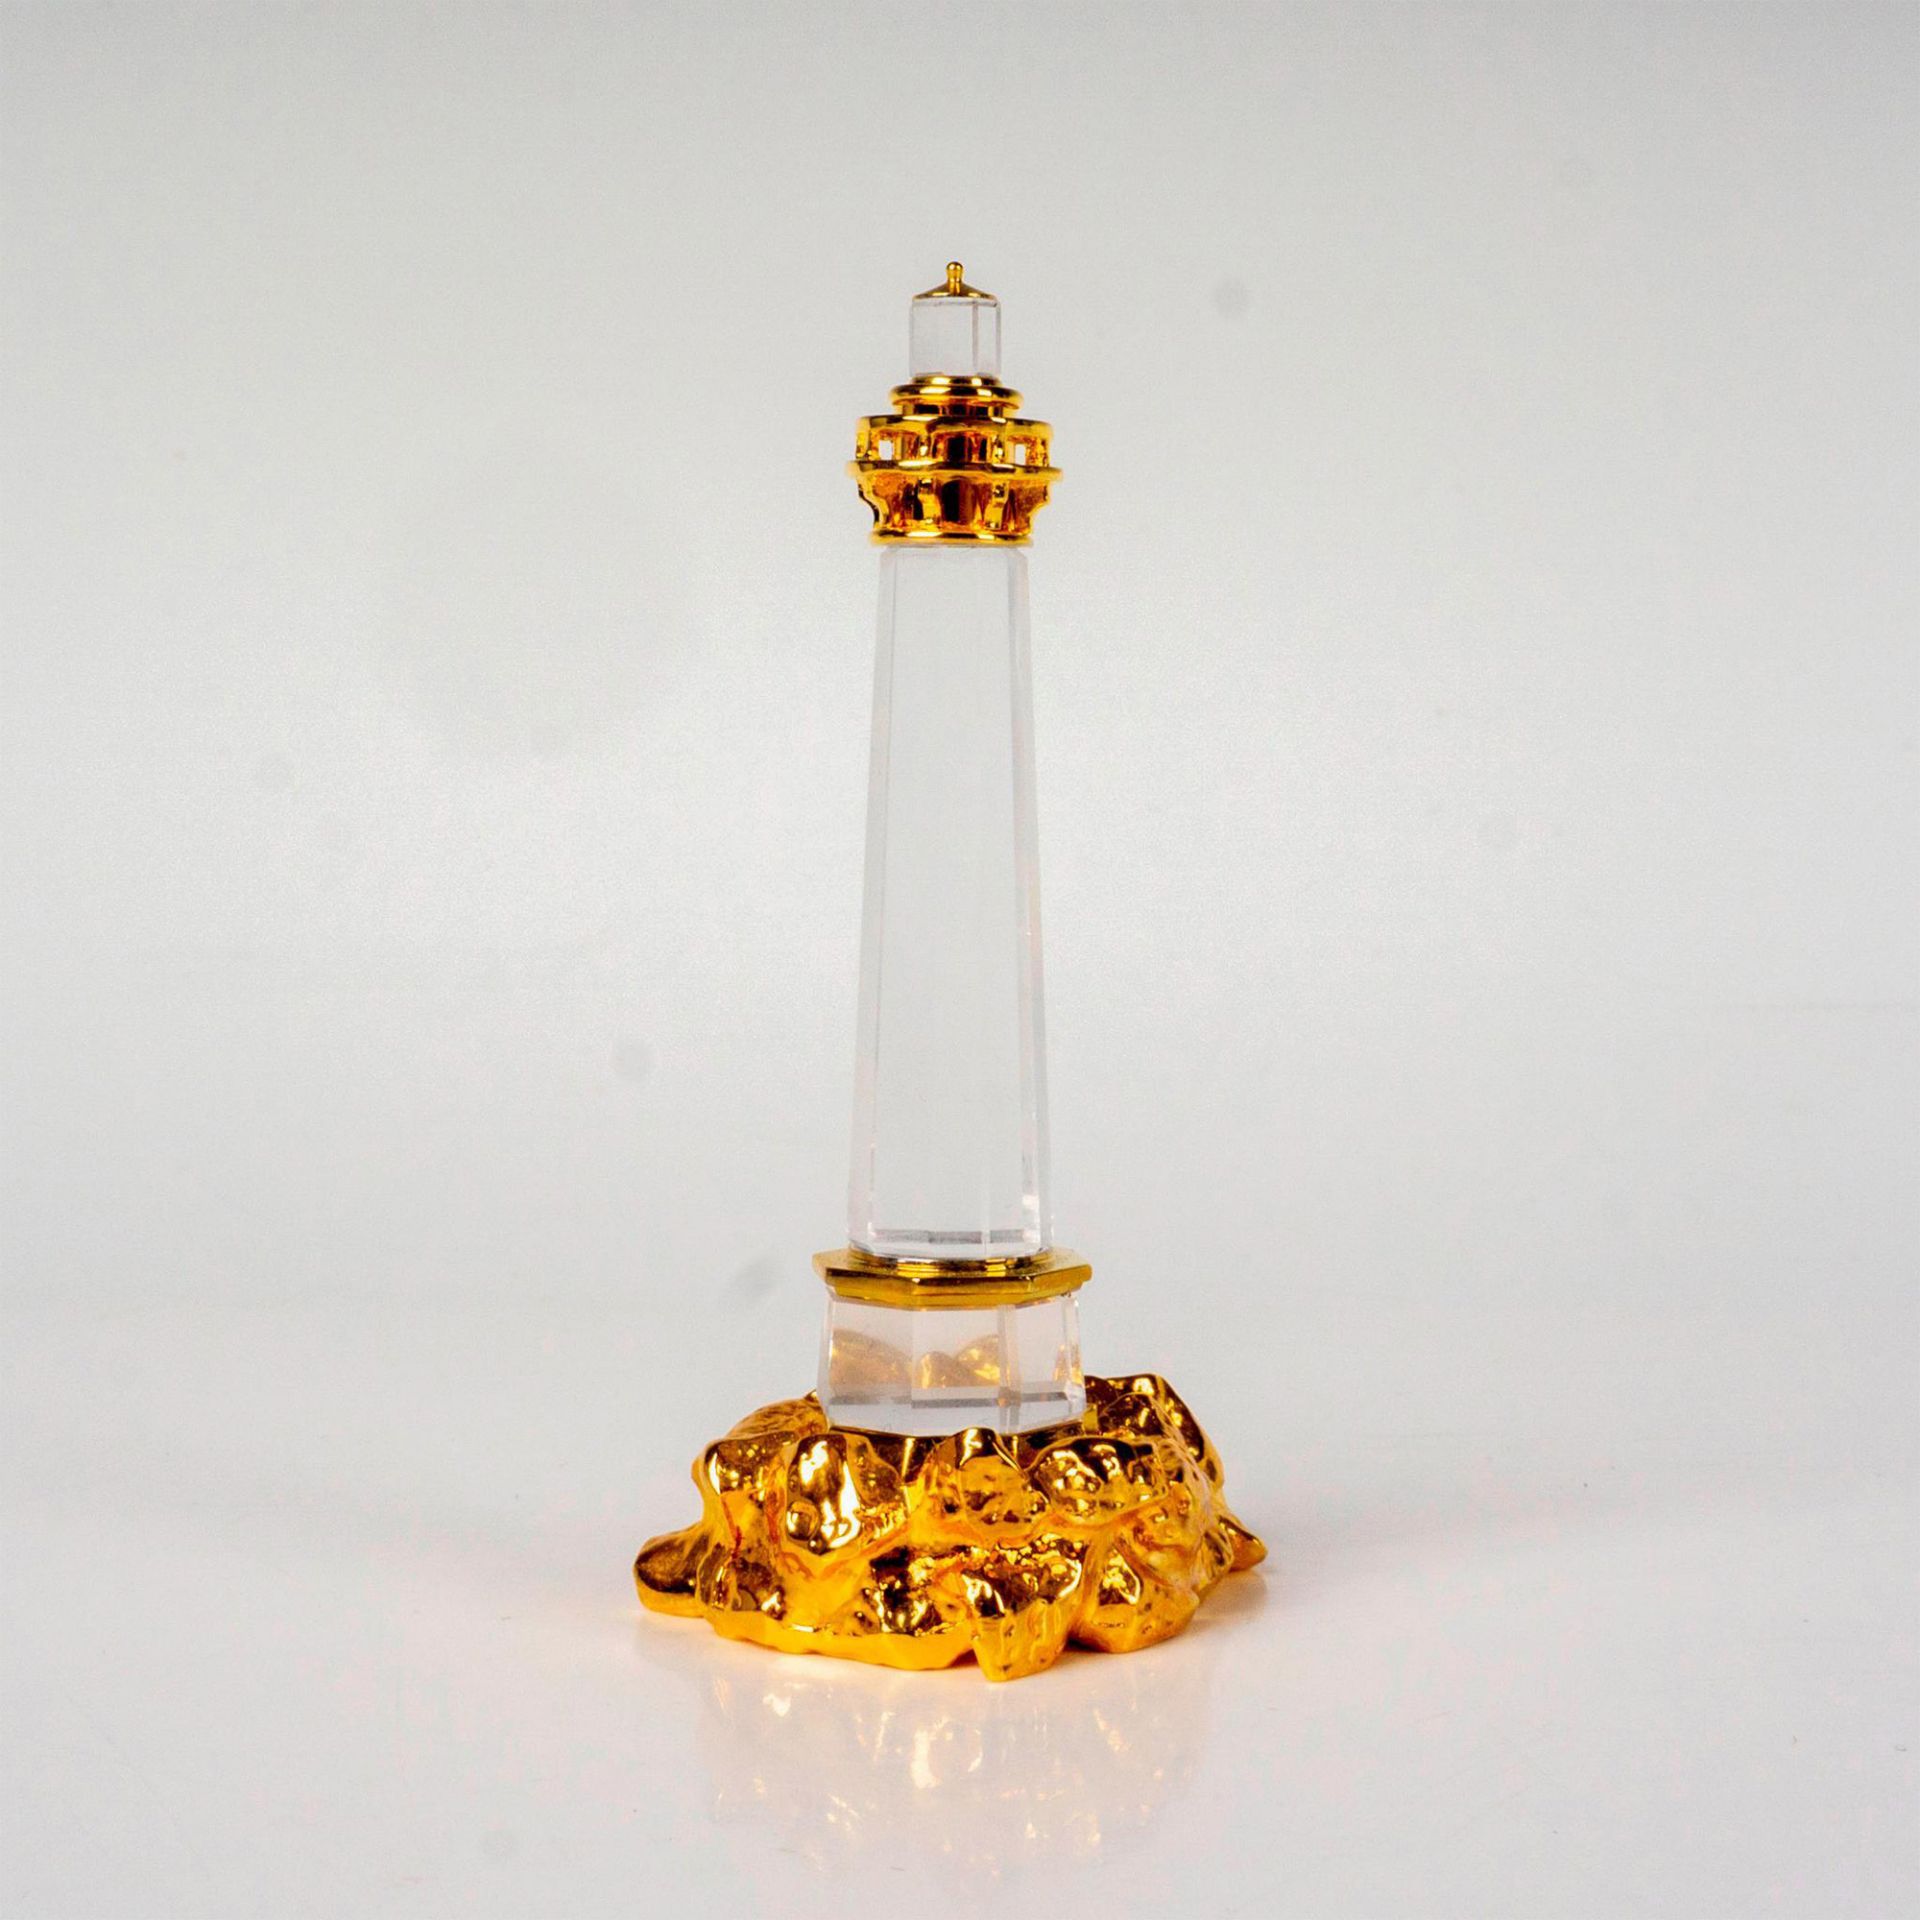 Swarovski Crystal Figurine, Lighthouse - Image 2 of 4